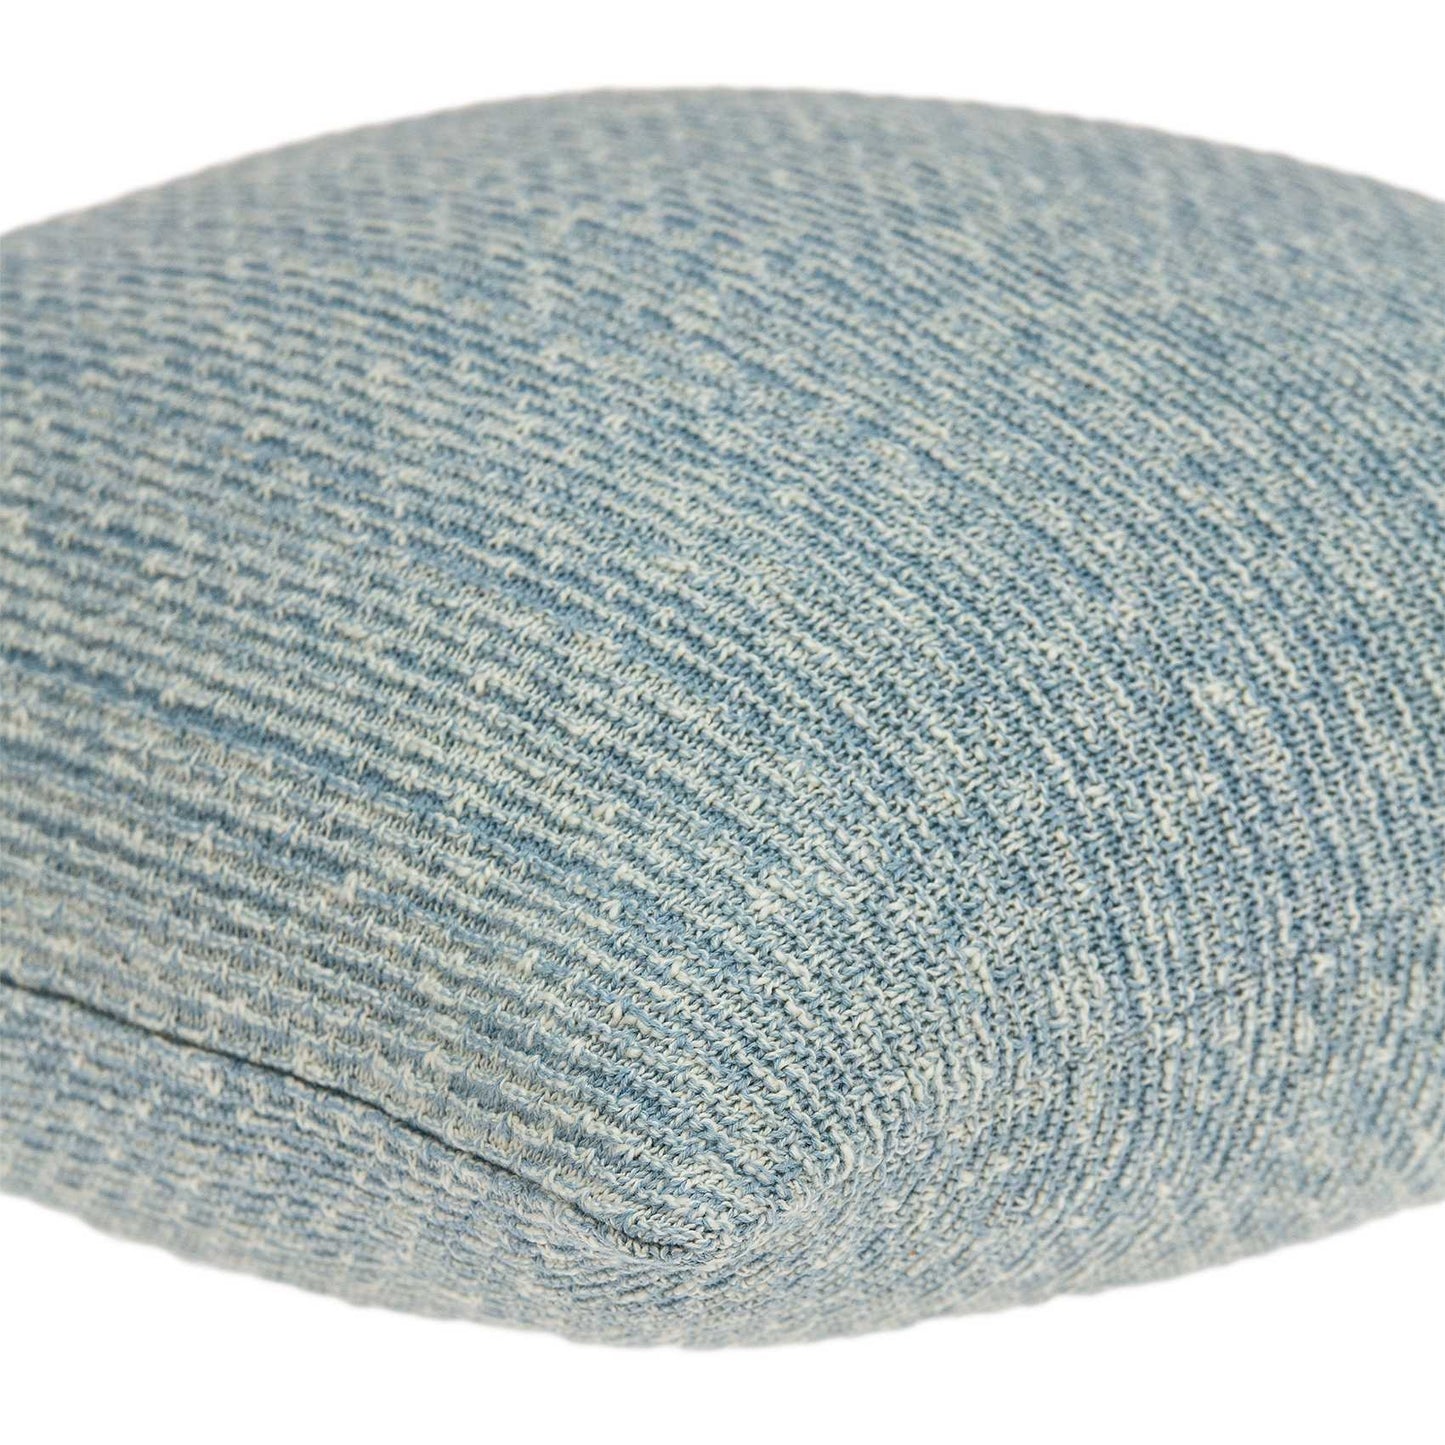 20" Aqua Teal Woven Cotton Blend Throw Pillow